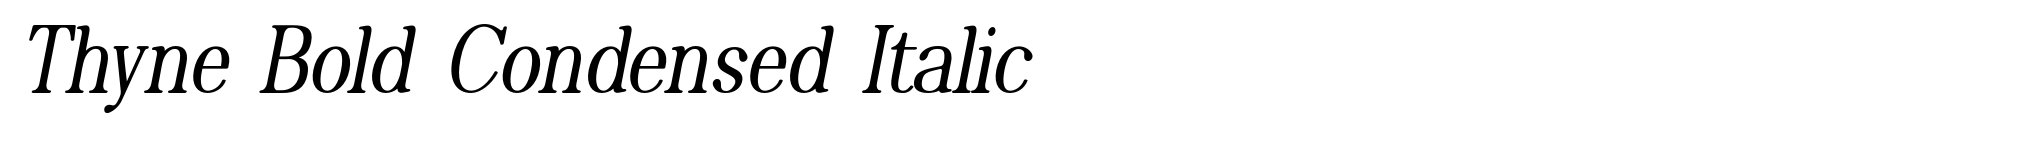 Thyne Bold Condensed Italic image